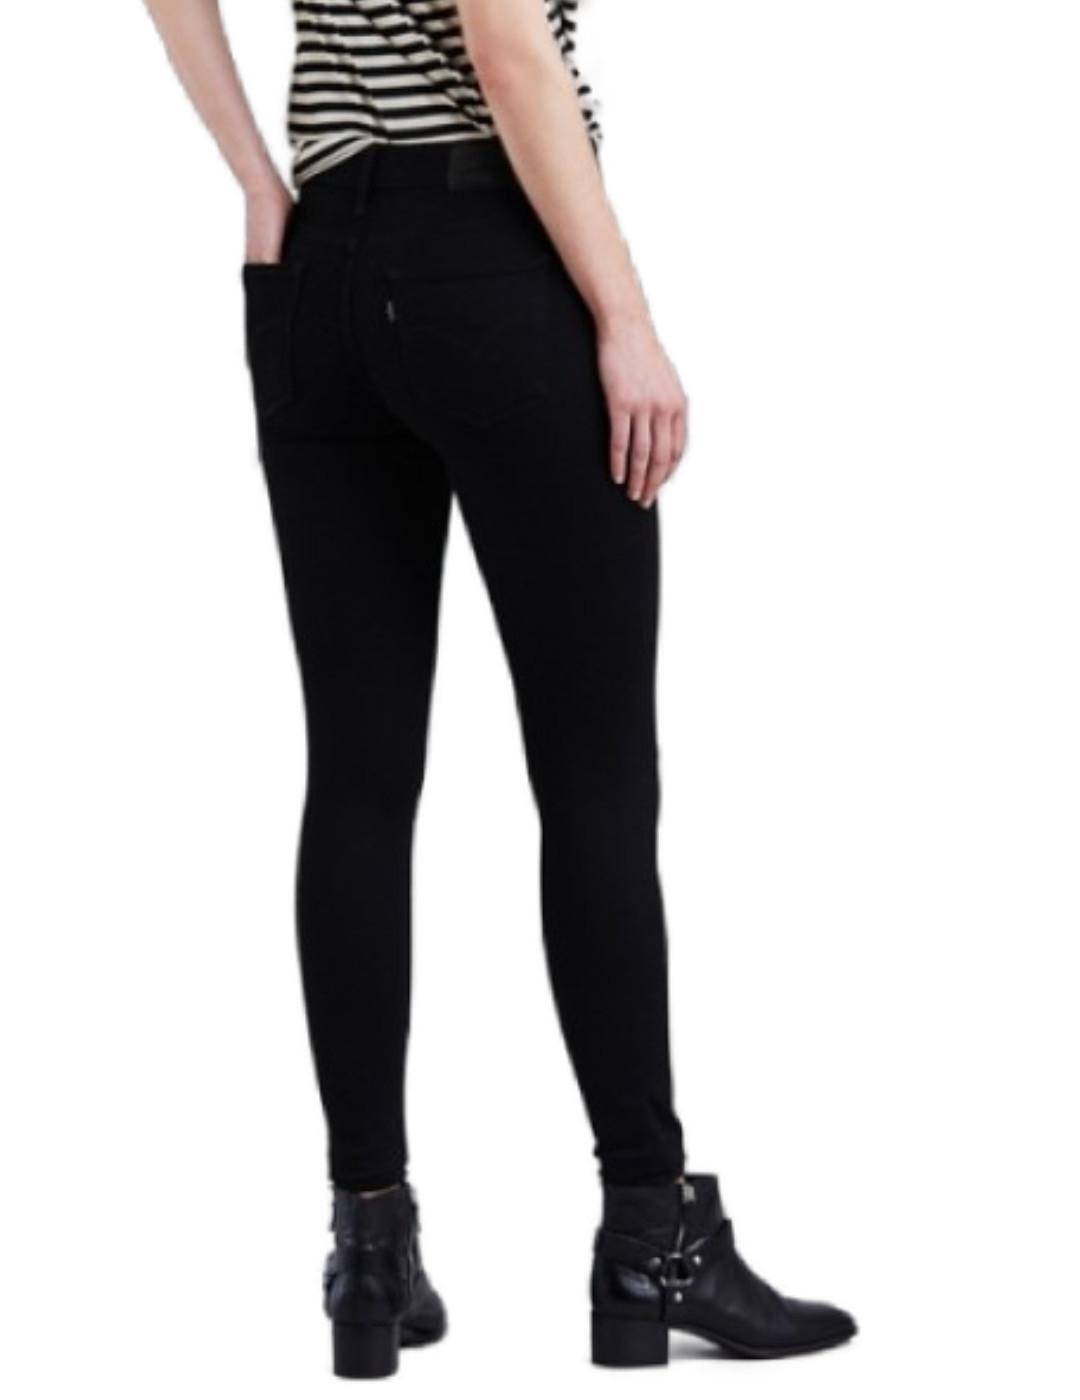  Pantalón Levi´s 720 negro Super Skinny talle alto de mujer